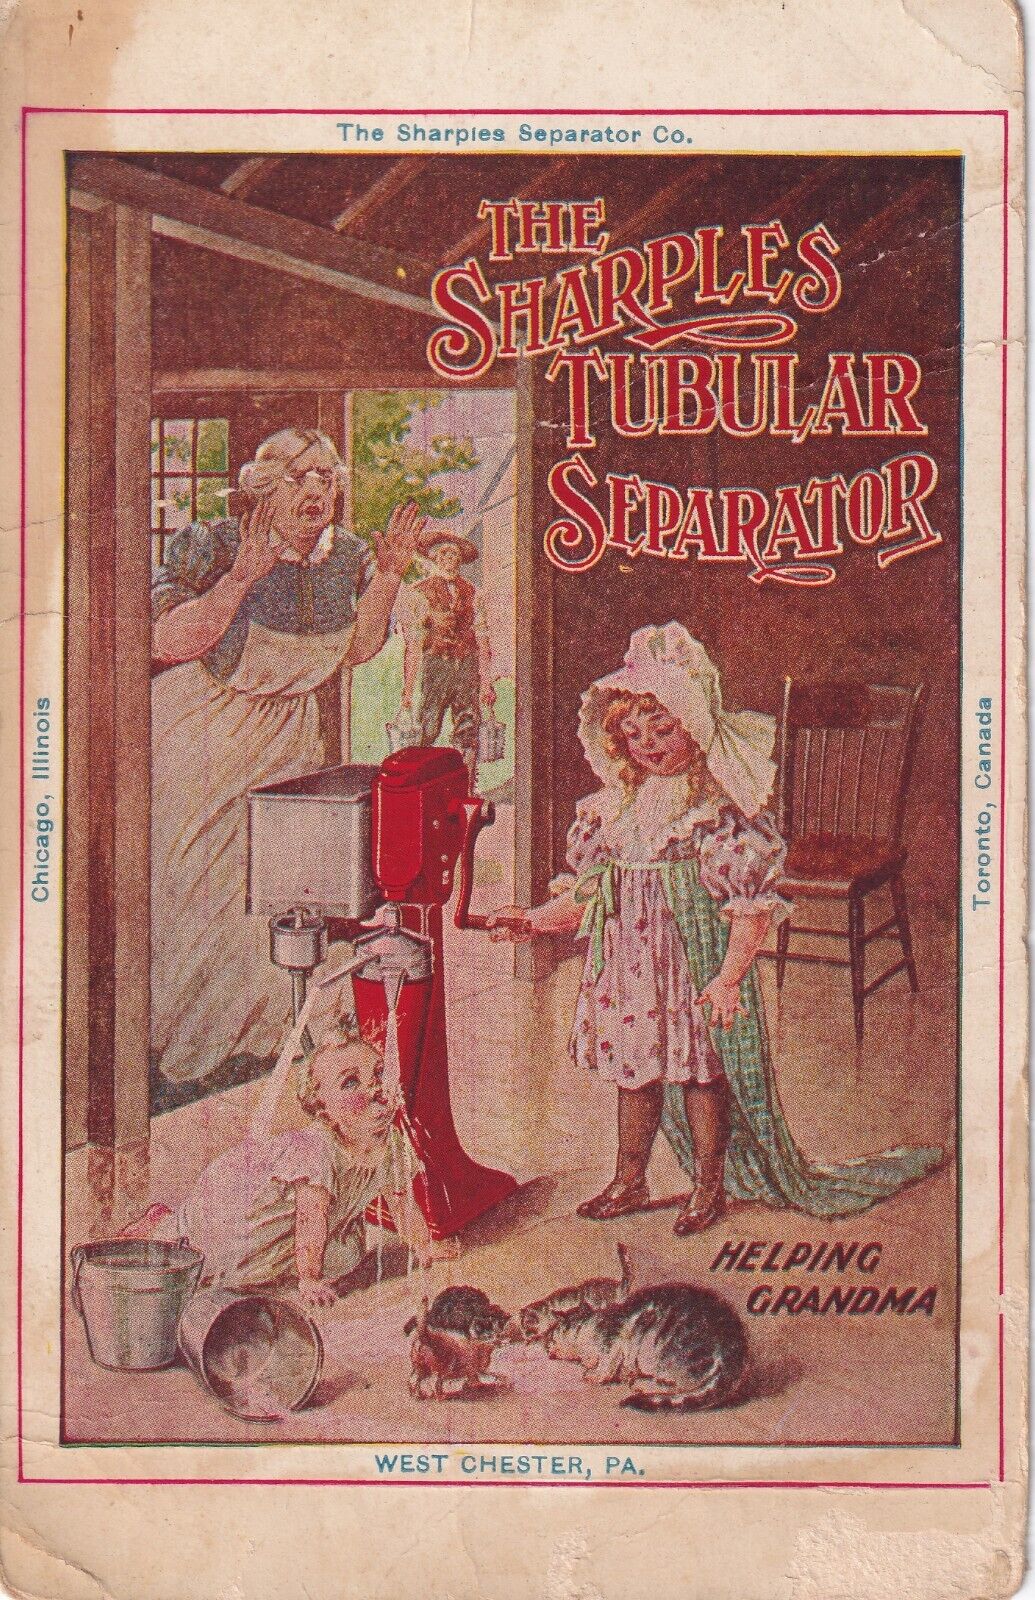 Vintage Postcard - The Sharples Tubular Separator Helping Grandma